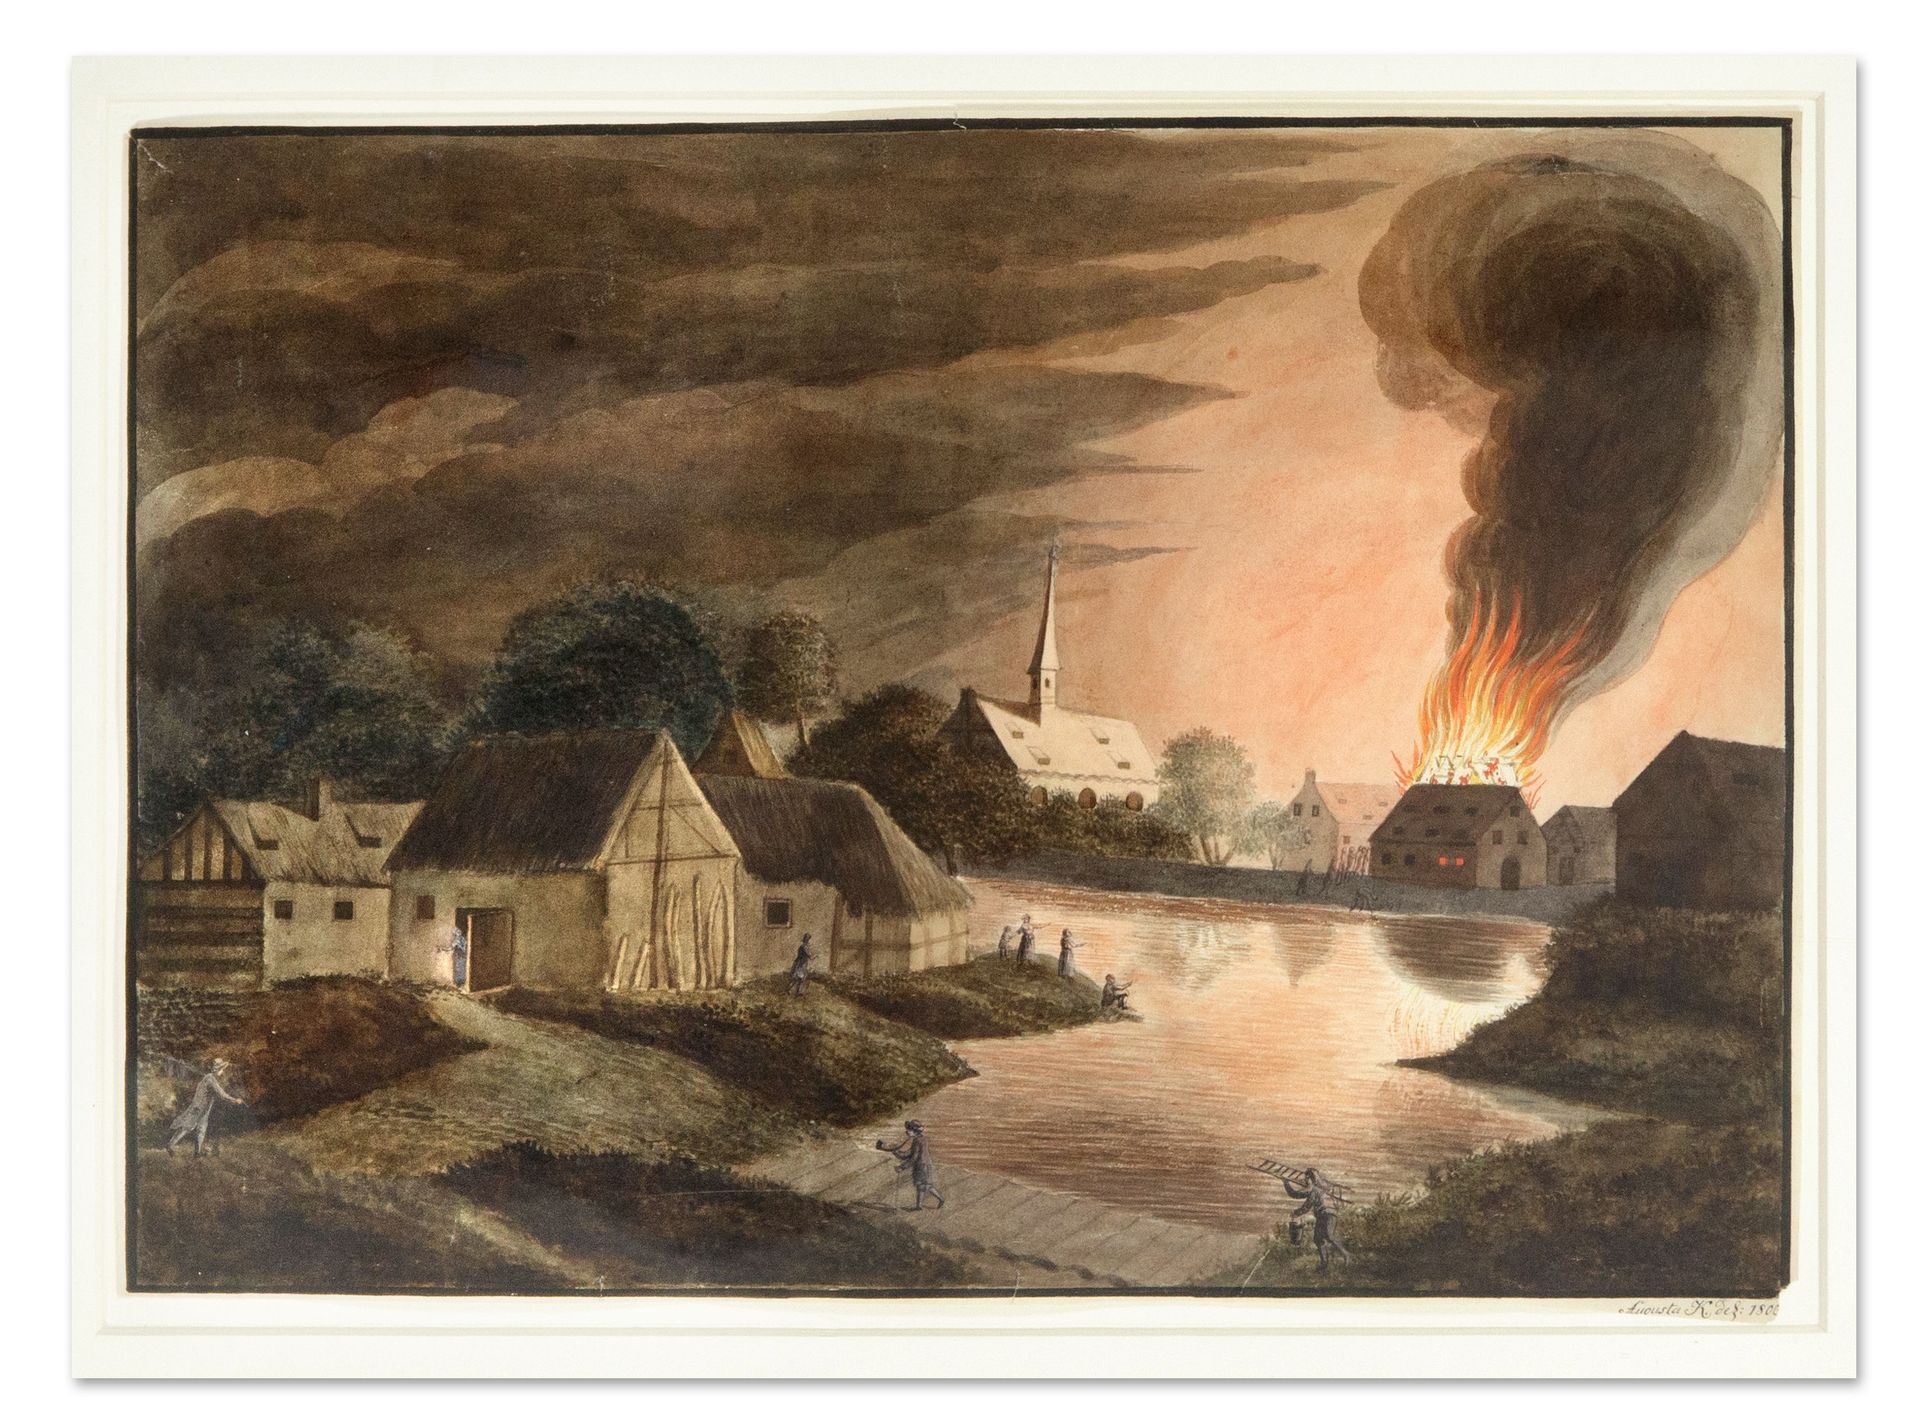 Null K.奥古斯塔，风景和风俗画家，约1800年，池塘边的村庄与燃烧的房子的景色，1800年，水粉和水彩画在纸上，用白色增高，在画面外的右下方签署并注明 "&hellip;